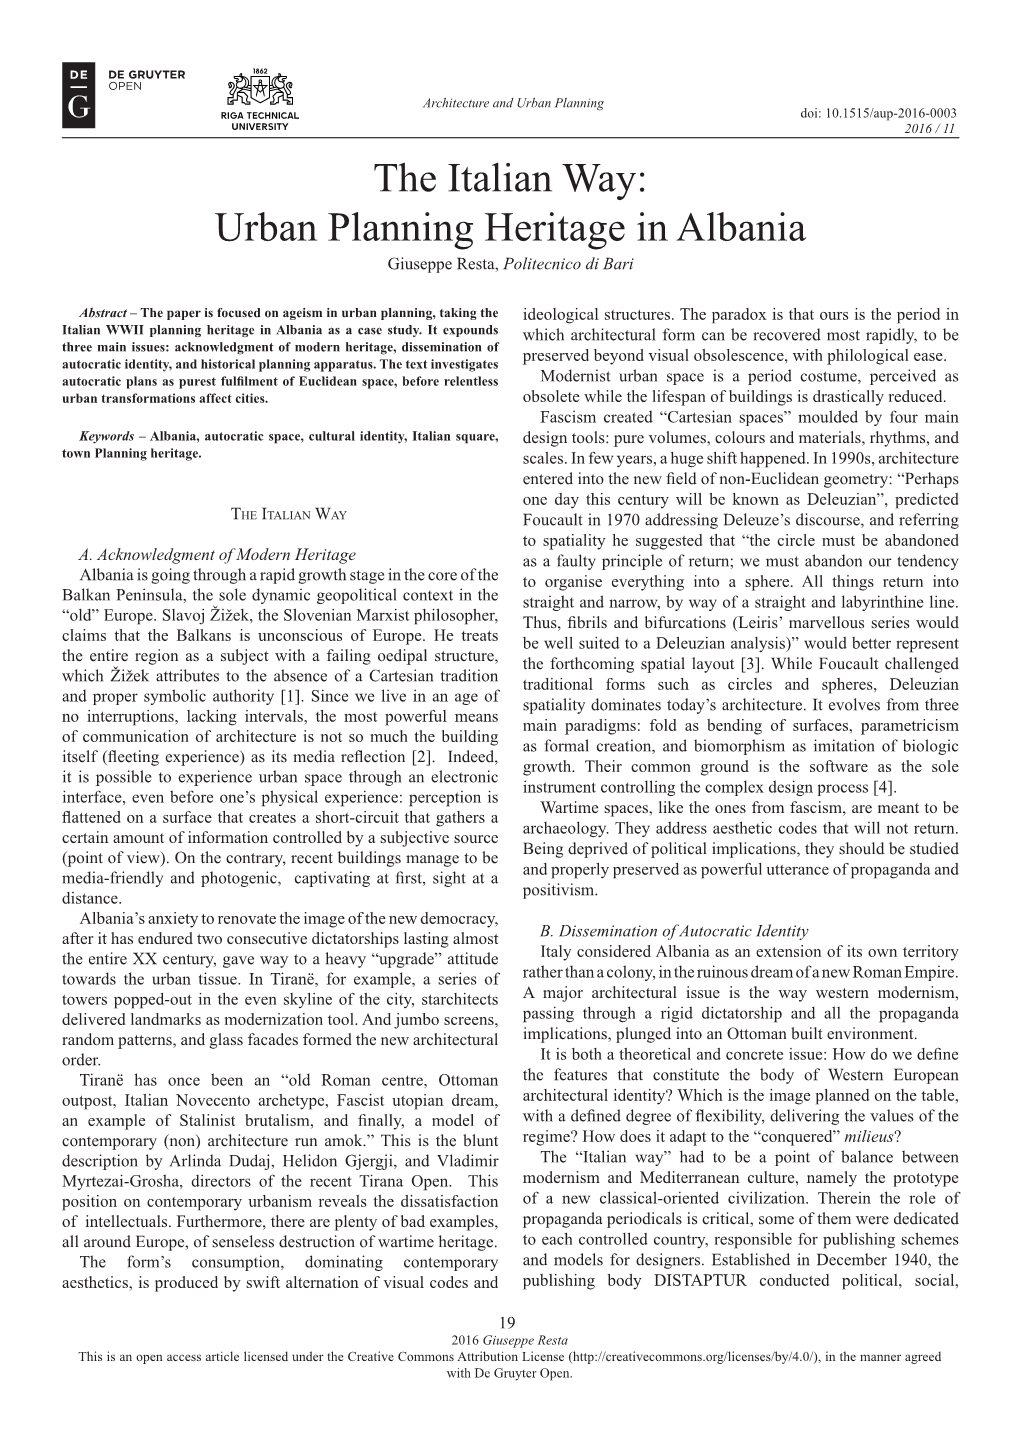 Urban Planning Heritage in Albania Giuseppe Resta, Politecnico Di Bari